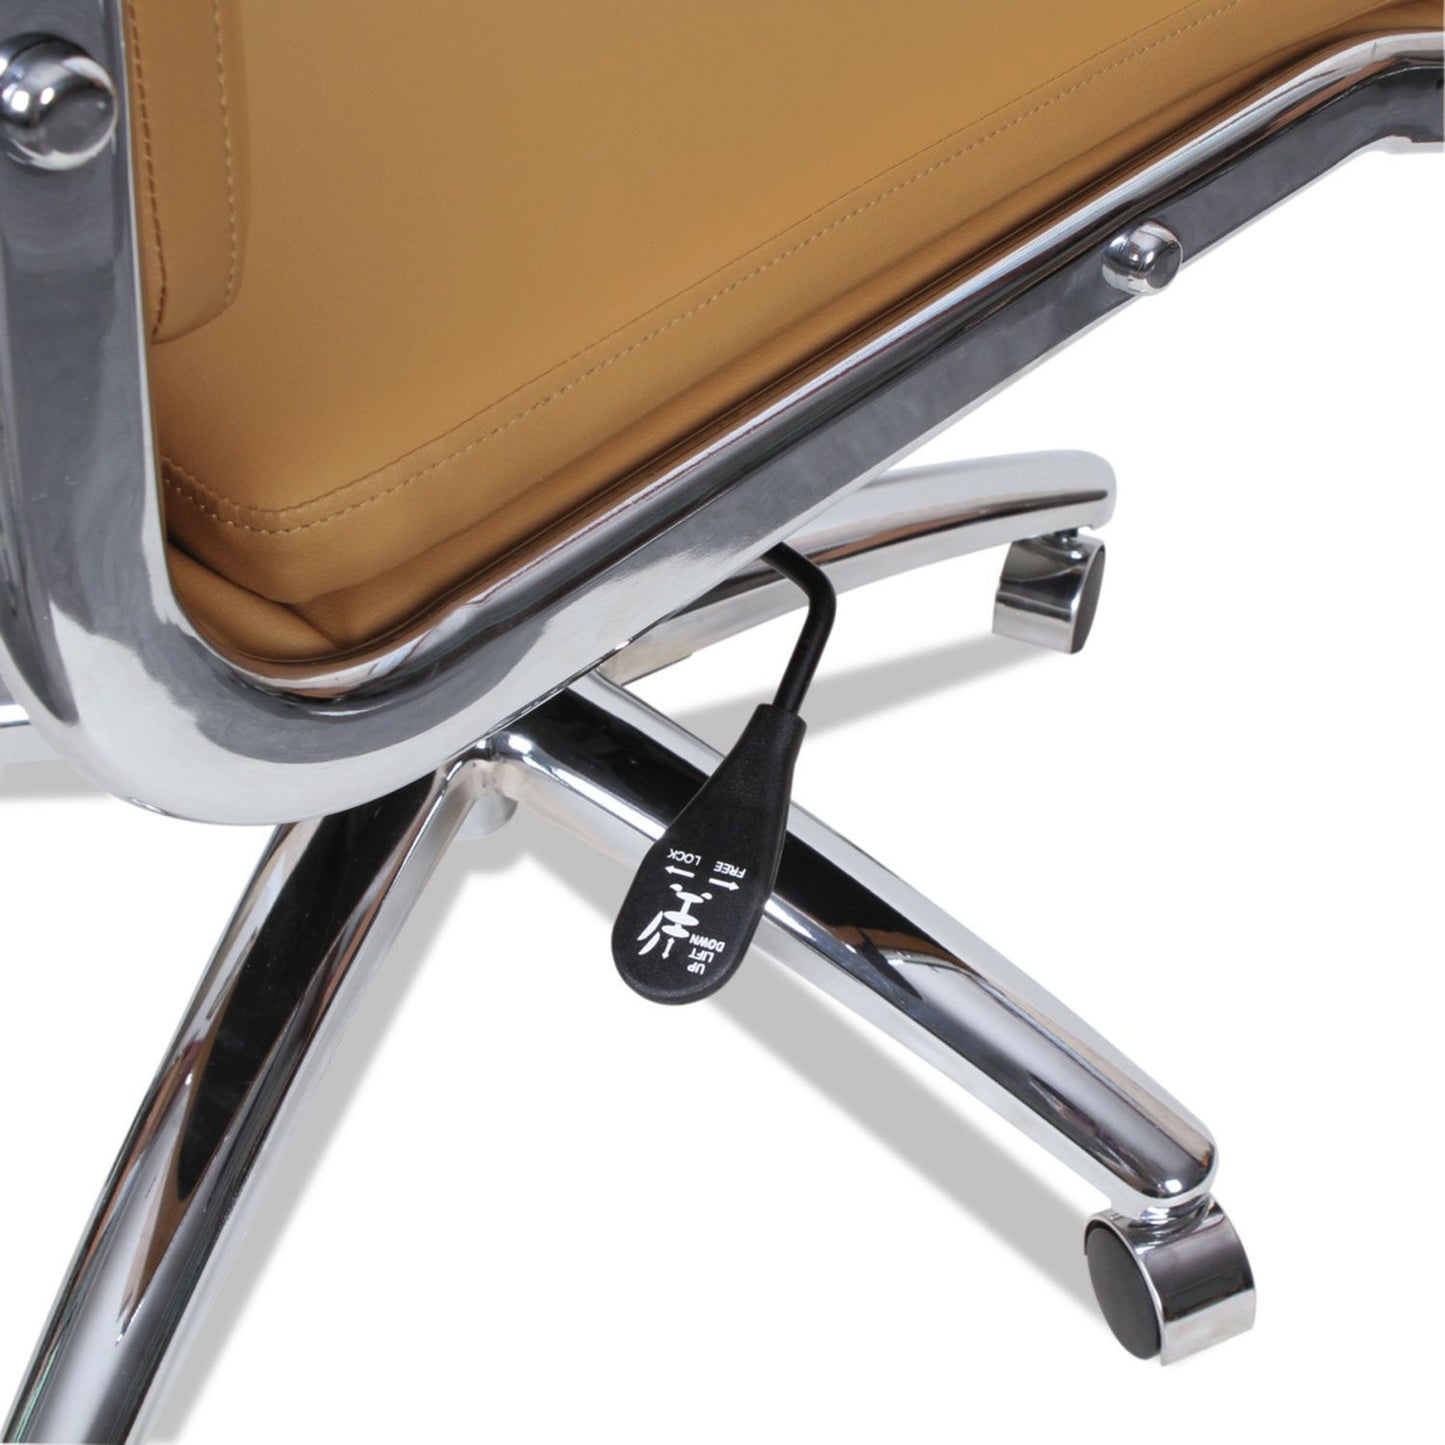 Alera Neratoli Series High-Back Swivel/Tilt Chair, Select Color